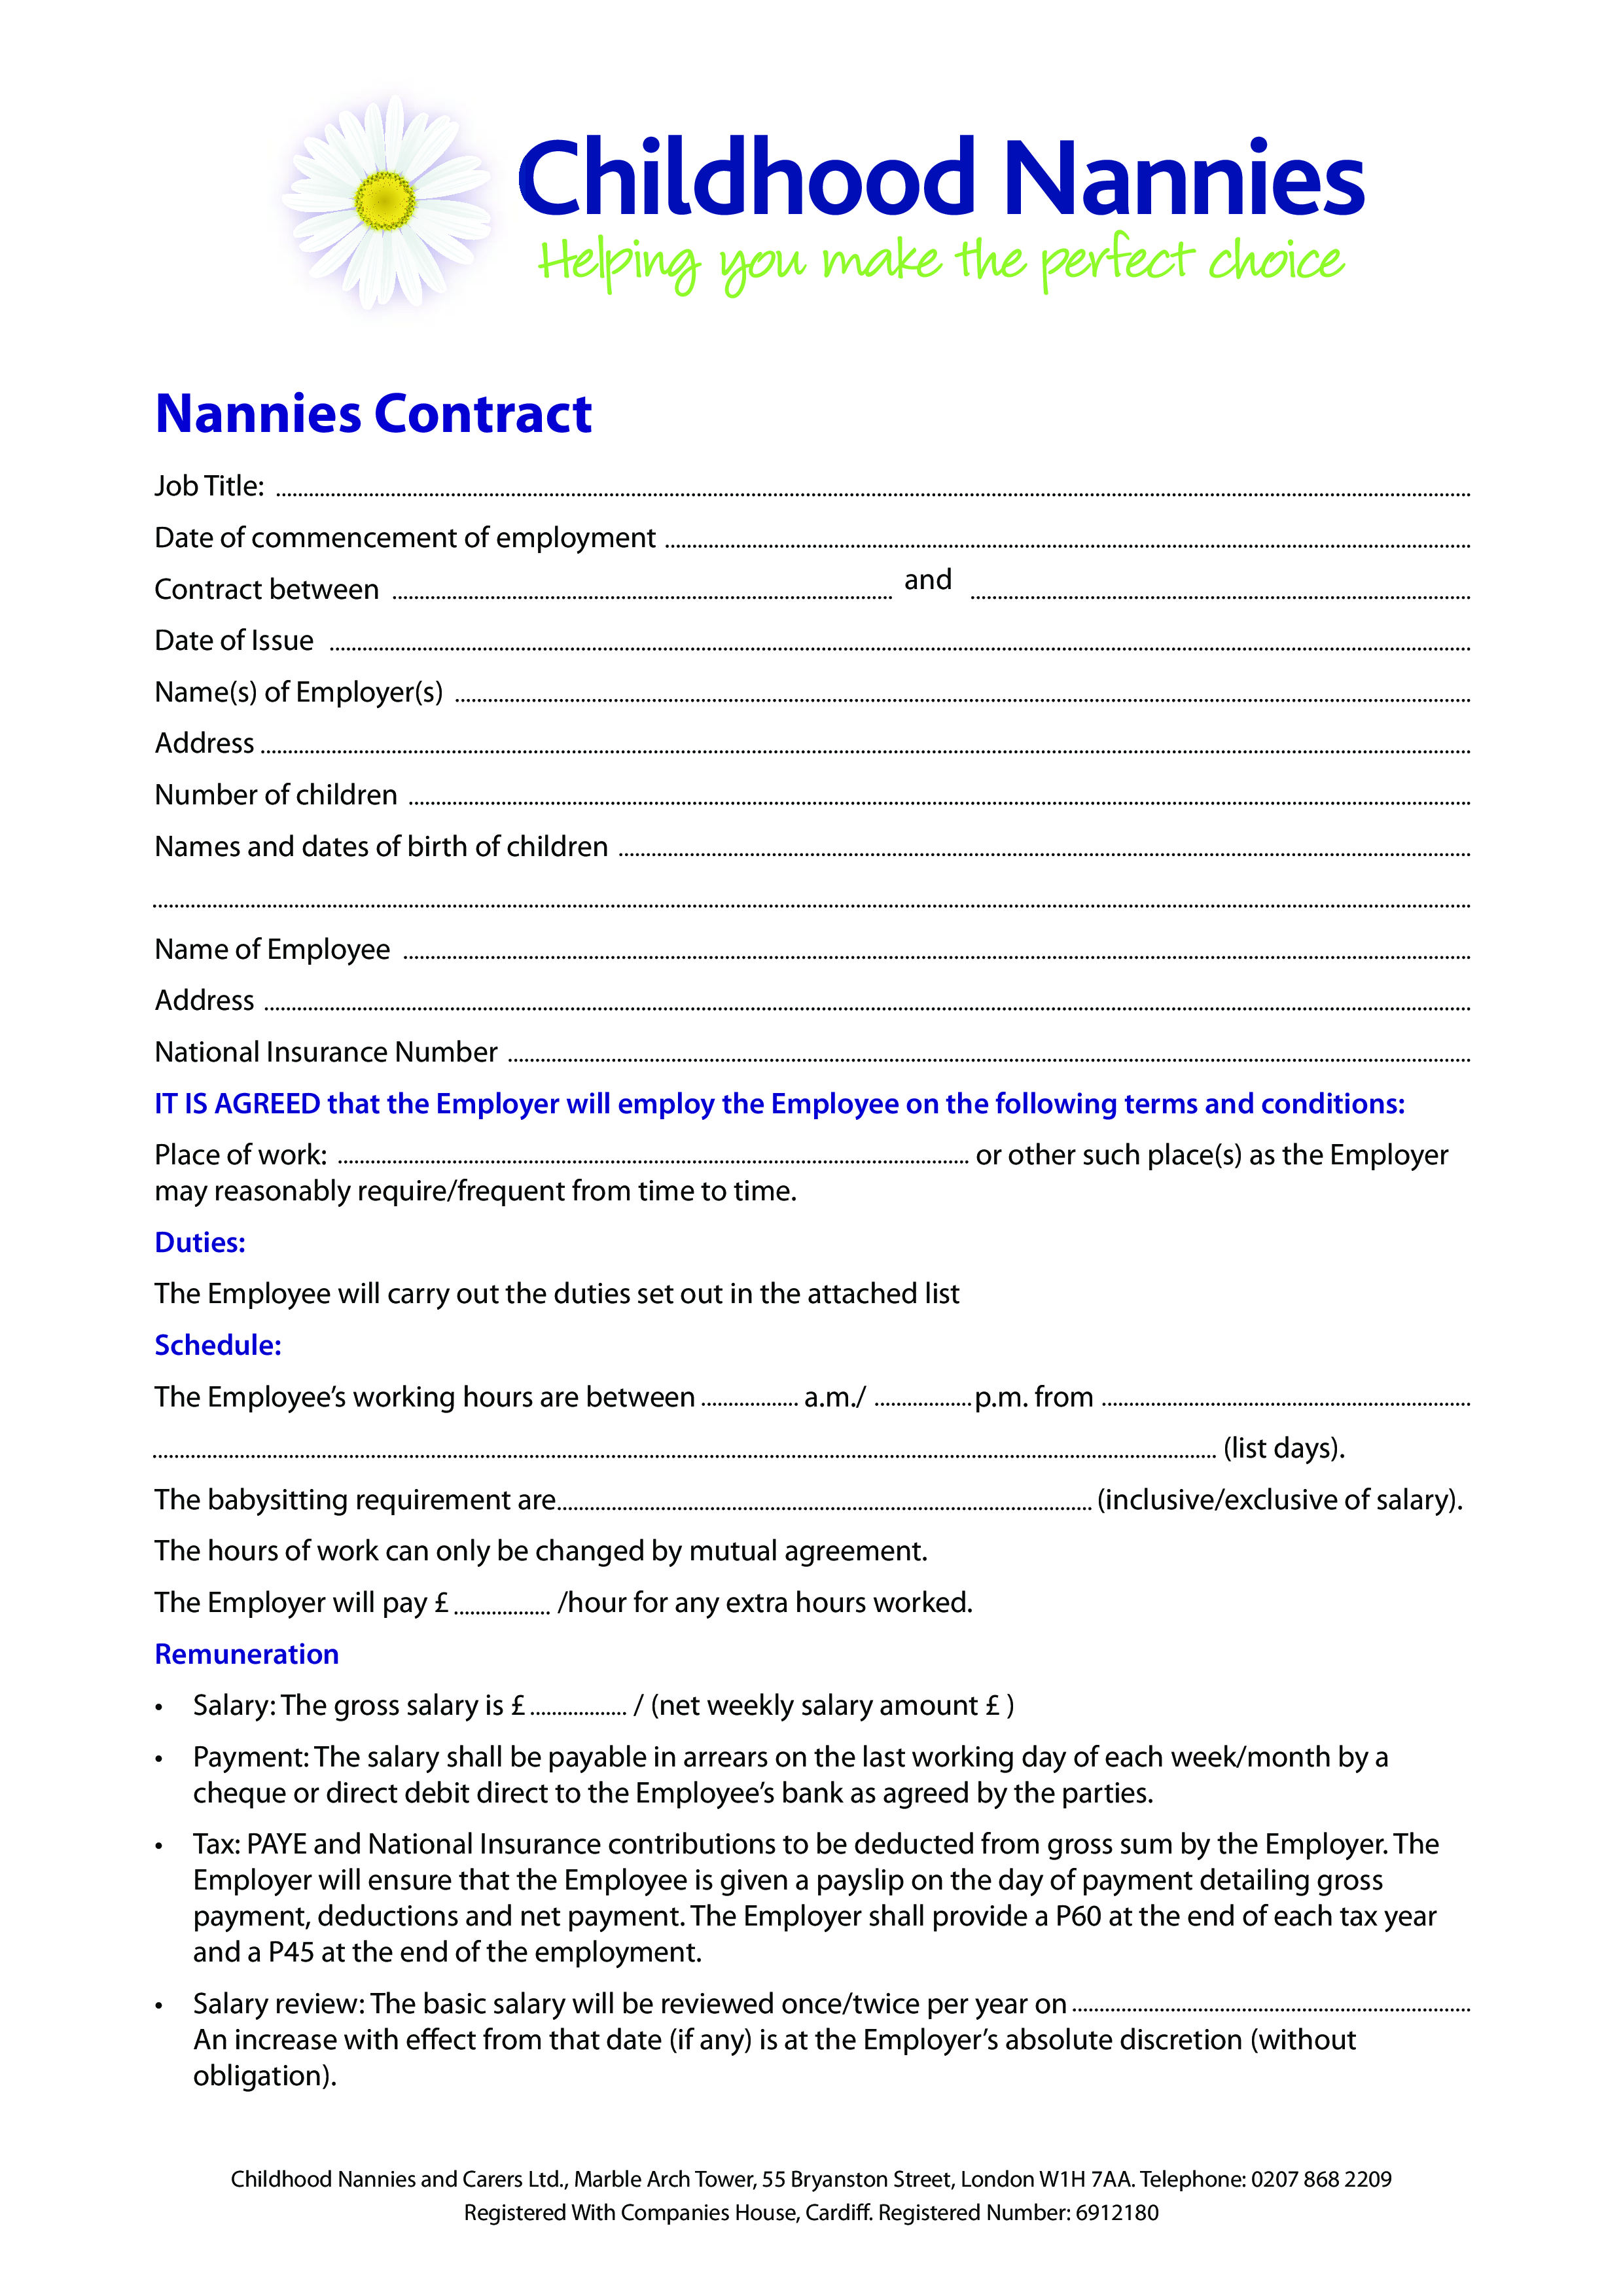 Nanny Contract example main image